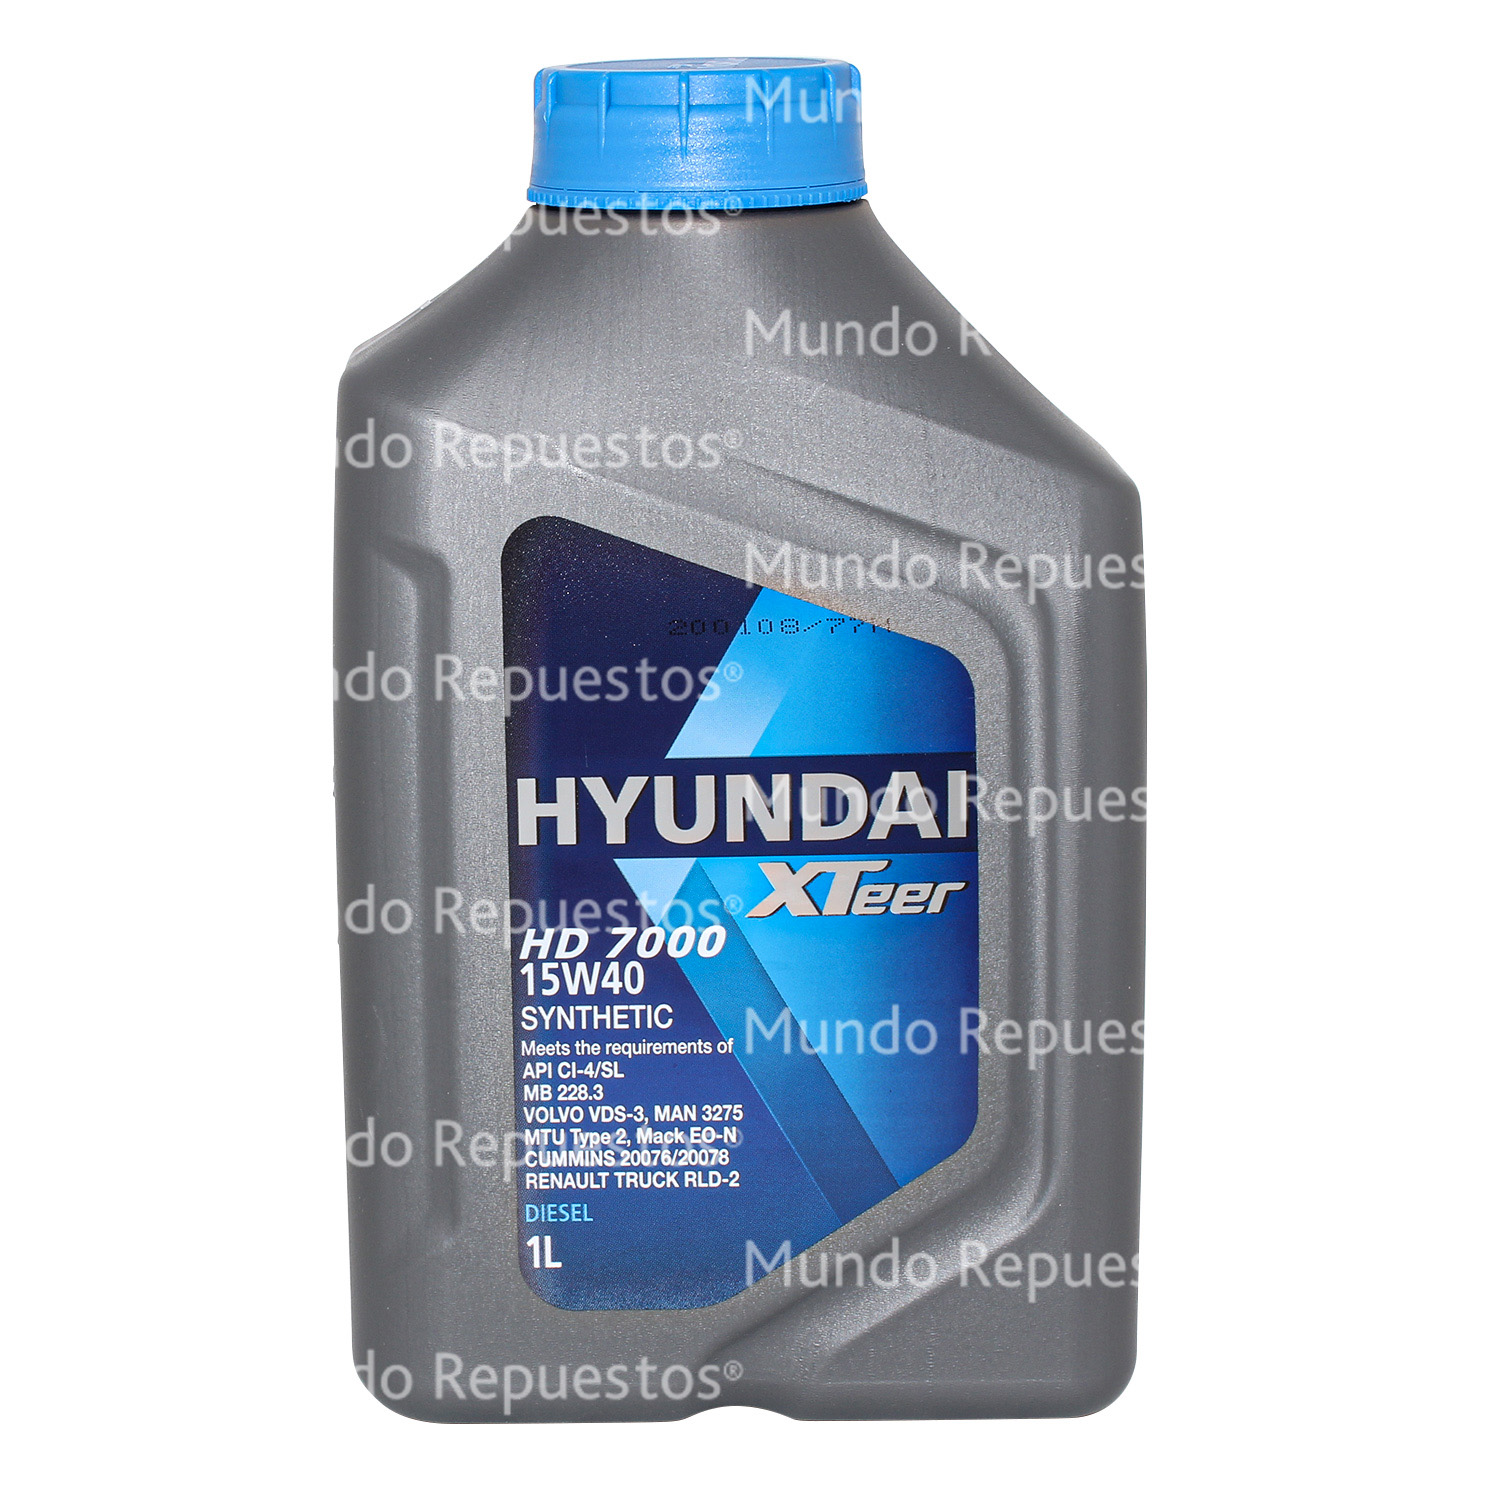 Aceite para motor 5W30 Hyundai Xteer Sintetico Diesel Ultra C3 Dpf - 1